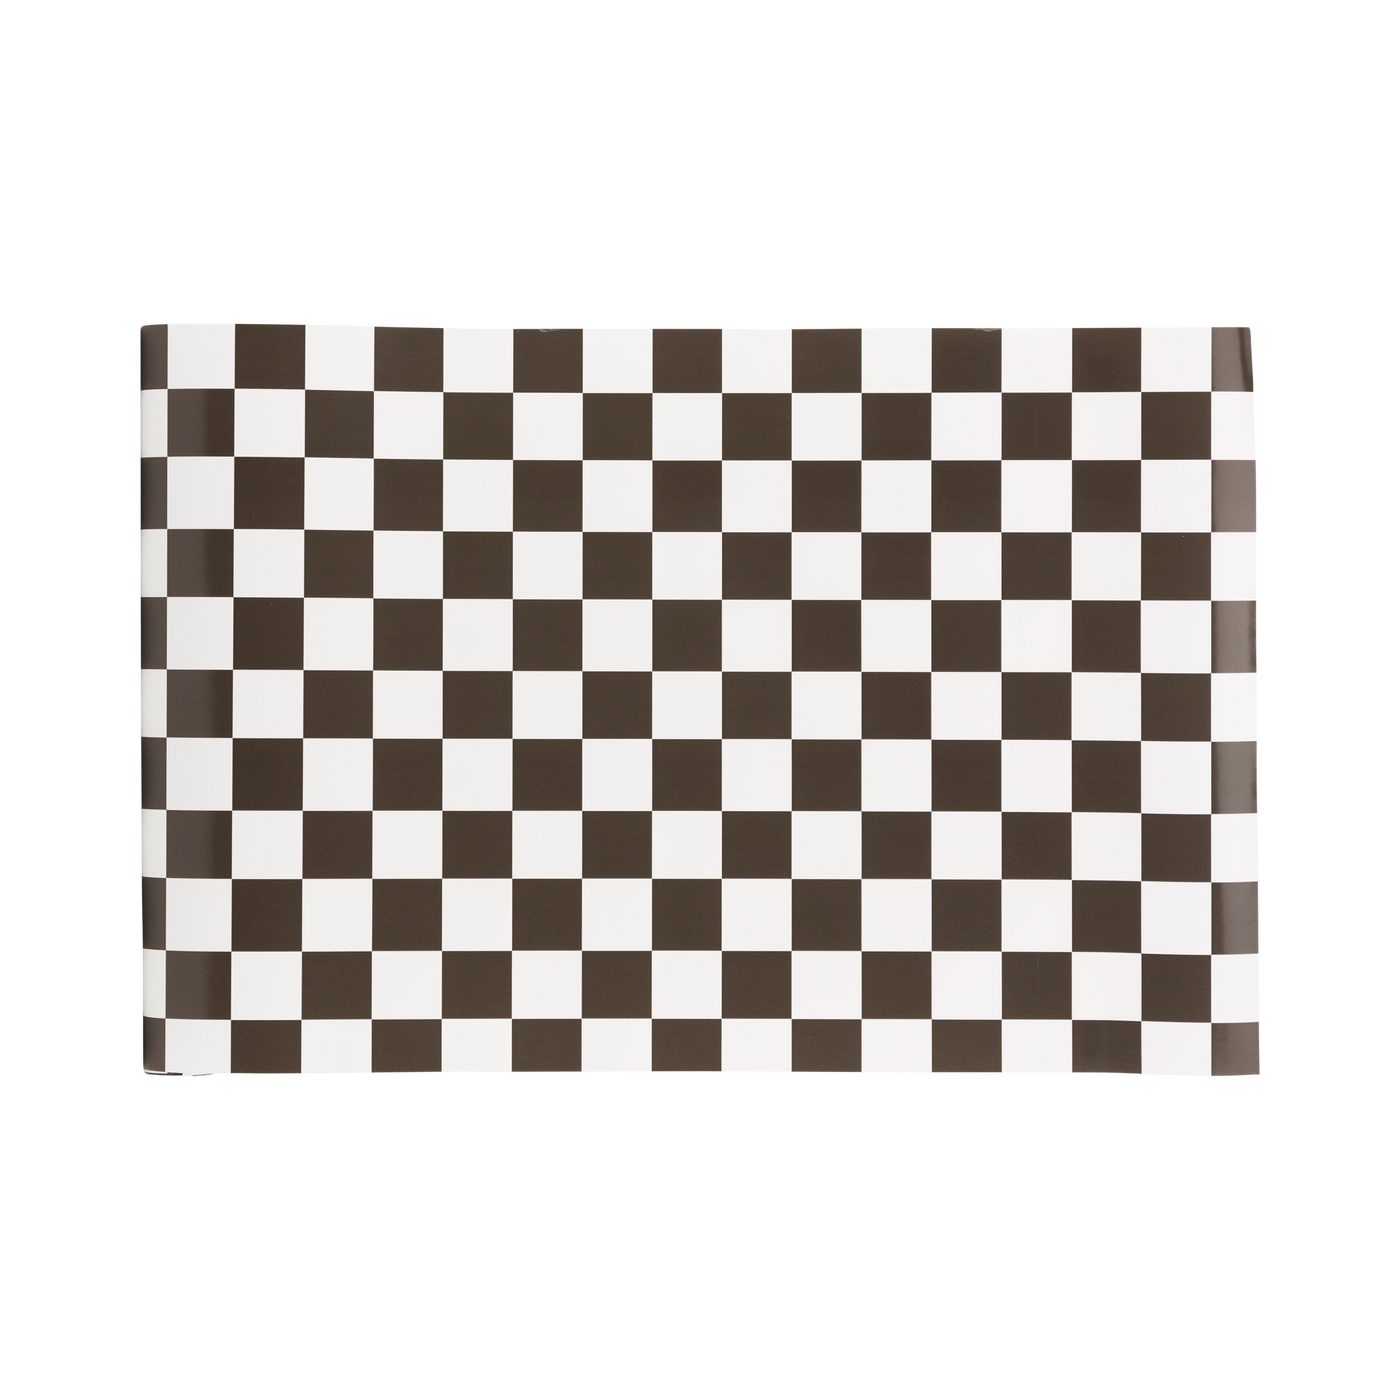 MIL1020 - Miles per Hour - Checkered Flag Table Runner